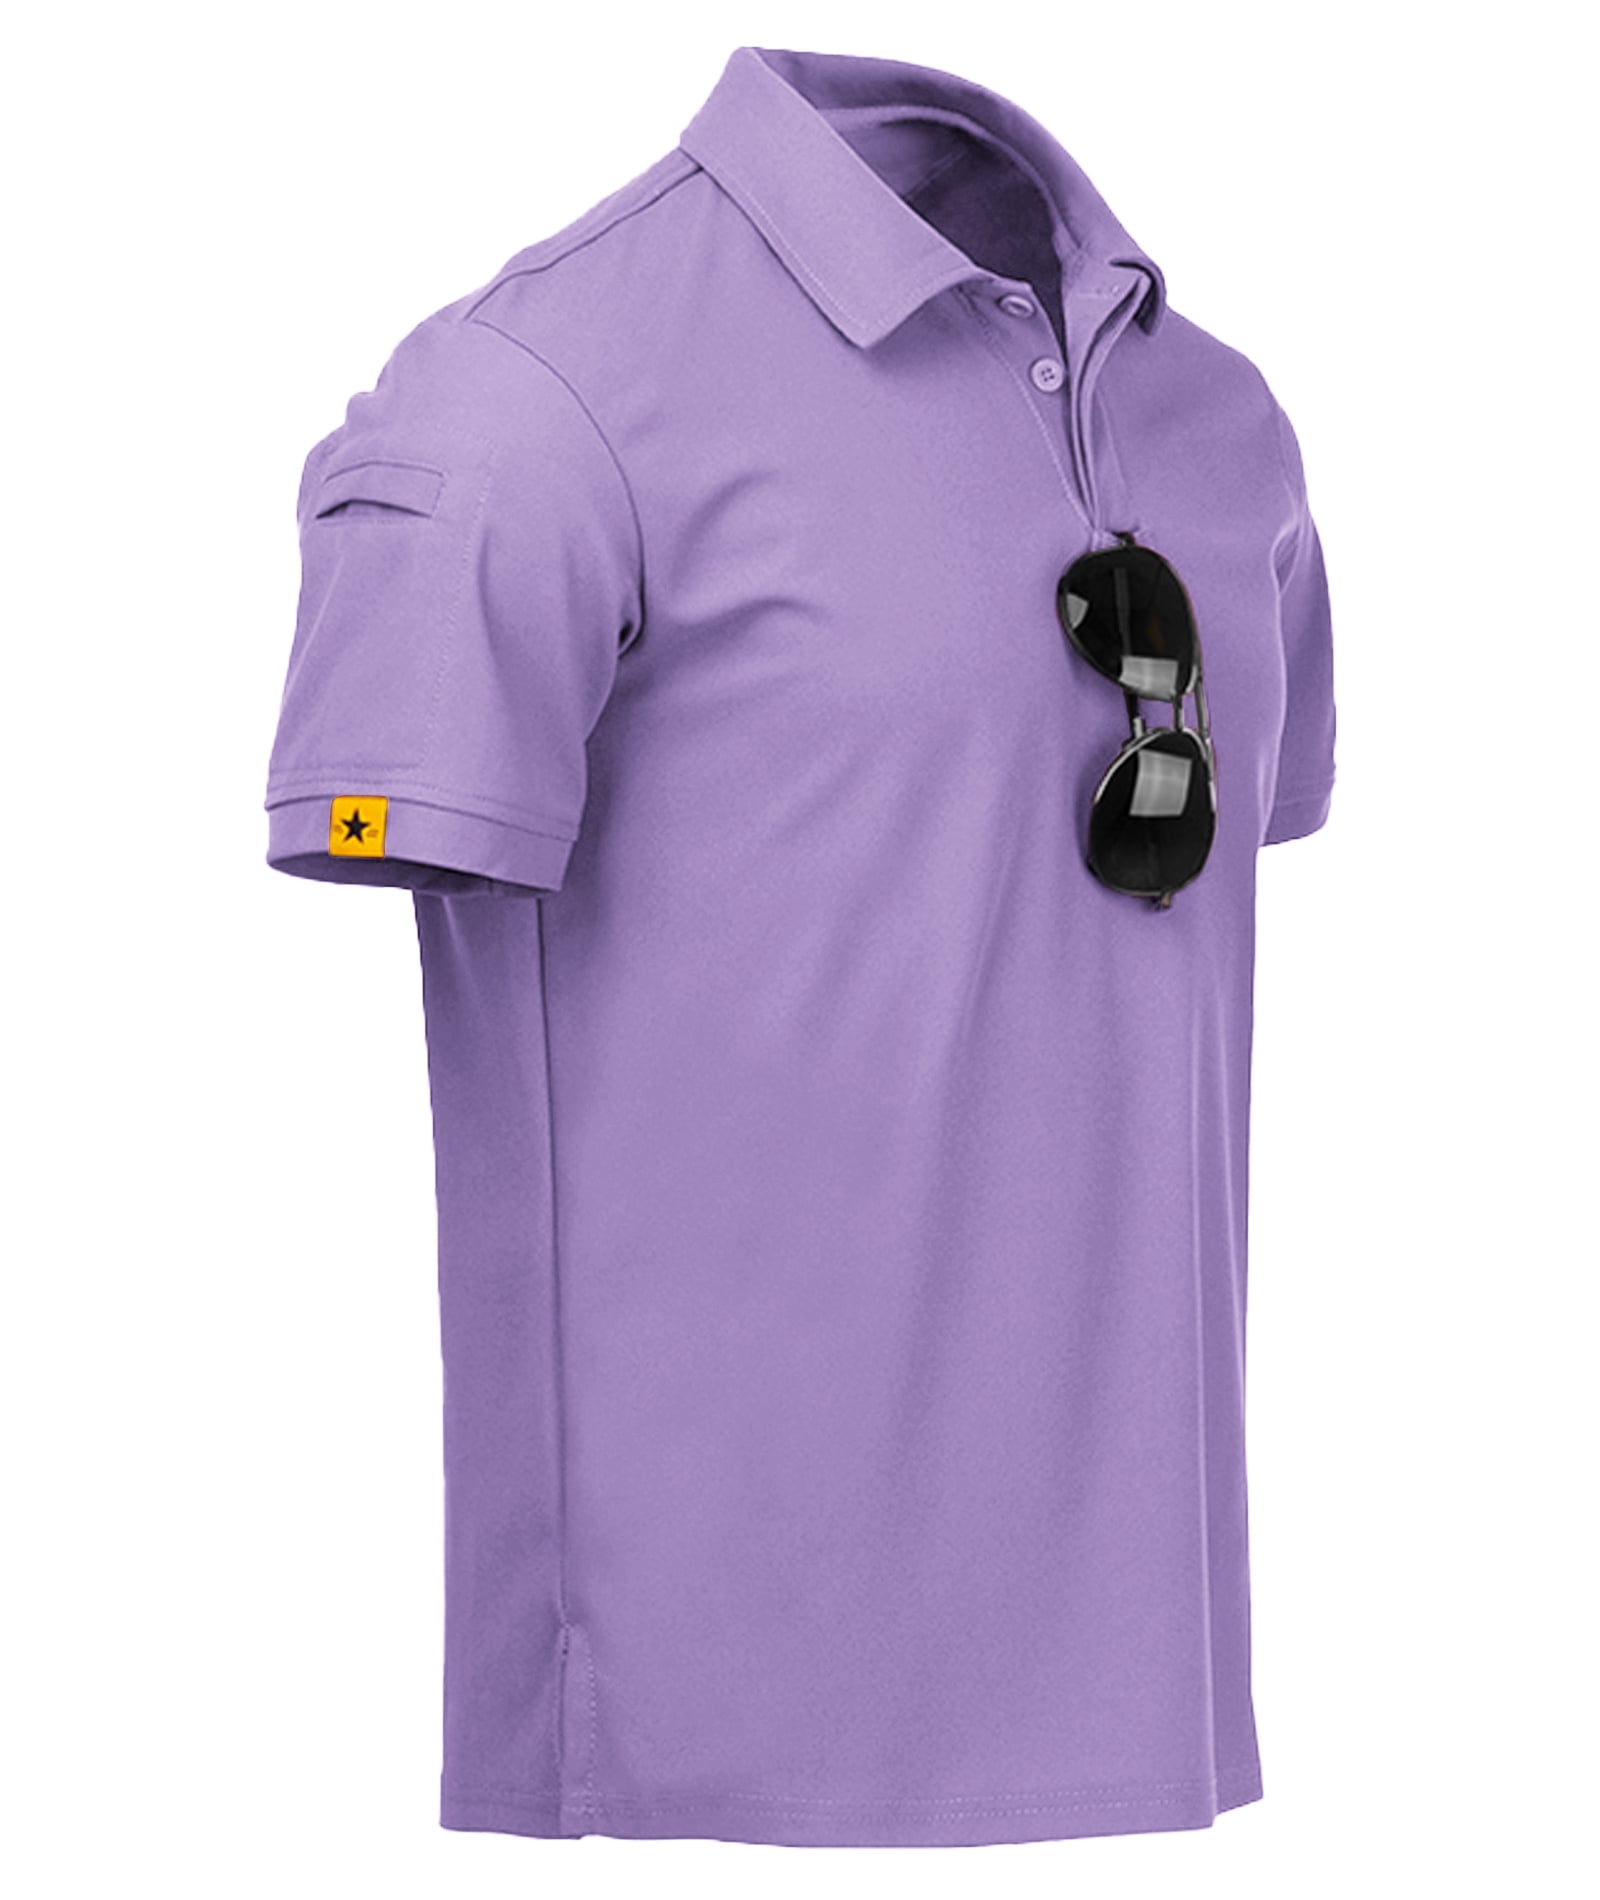 SCODI Men's Classic Fit Golf Shirts Short Sleeve Polo Shirts Moisture ...